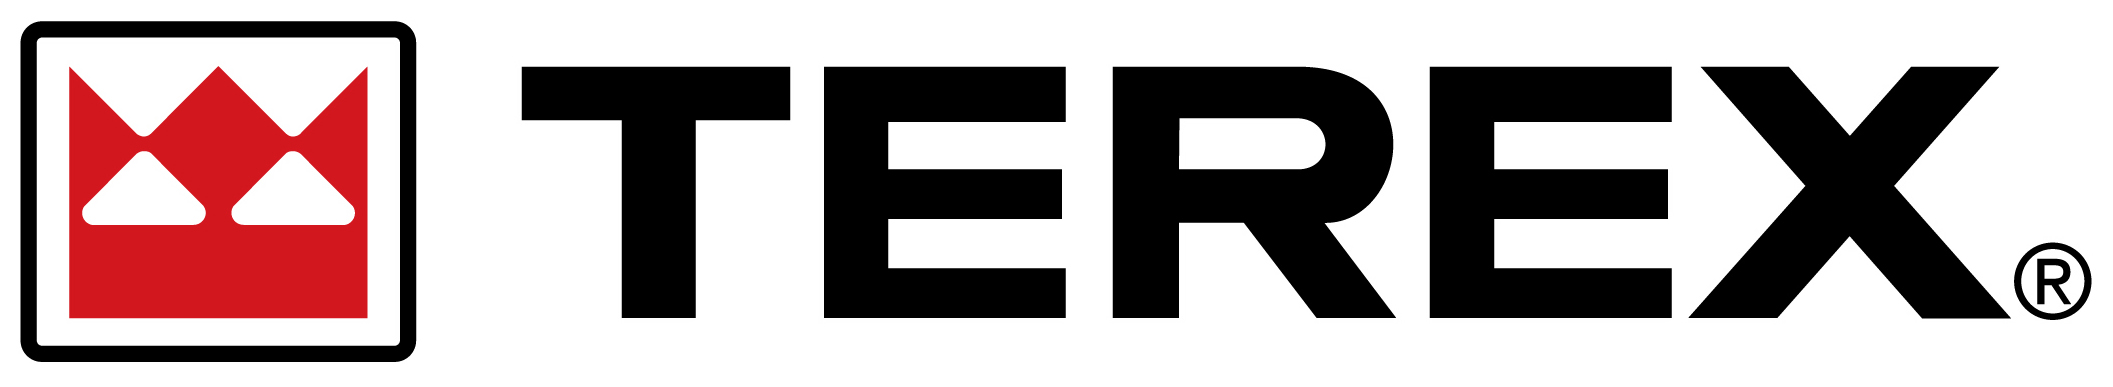 TelRED Logo photo - 1